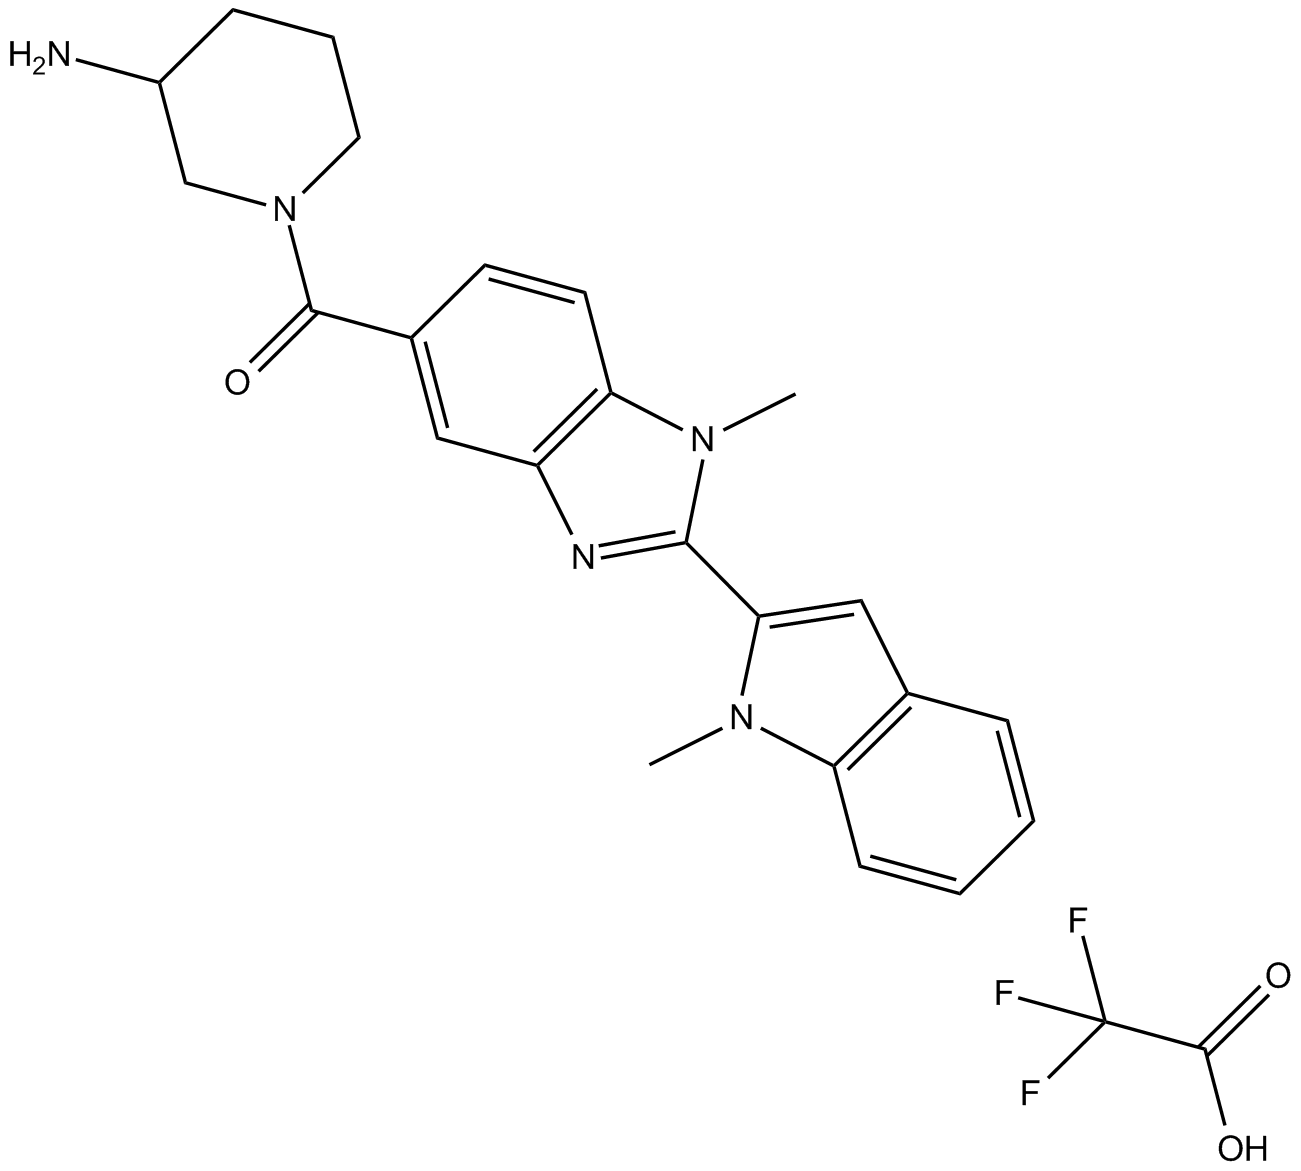 GSK121 (trifluoroacetate salt)